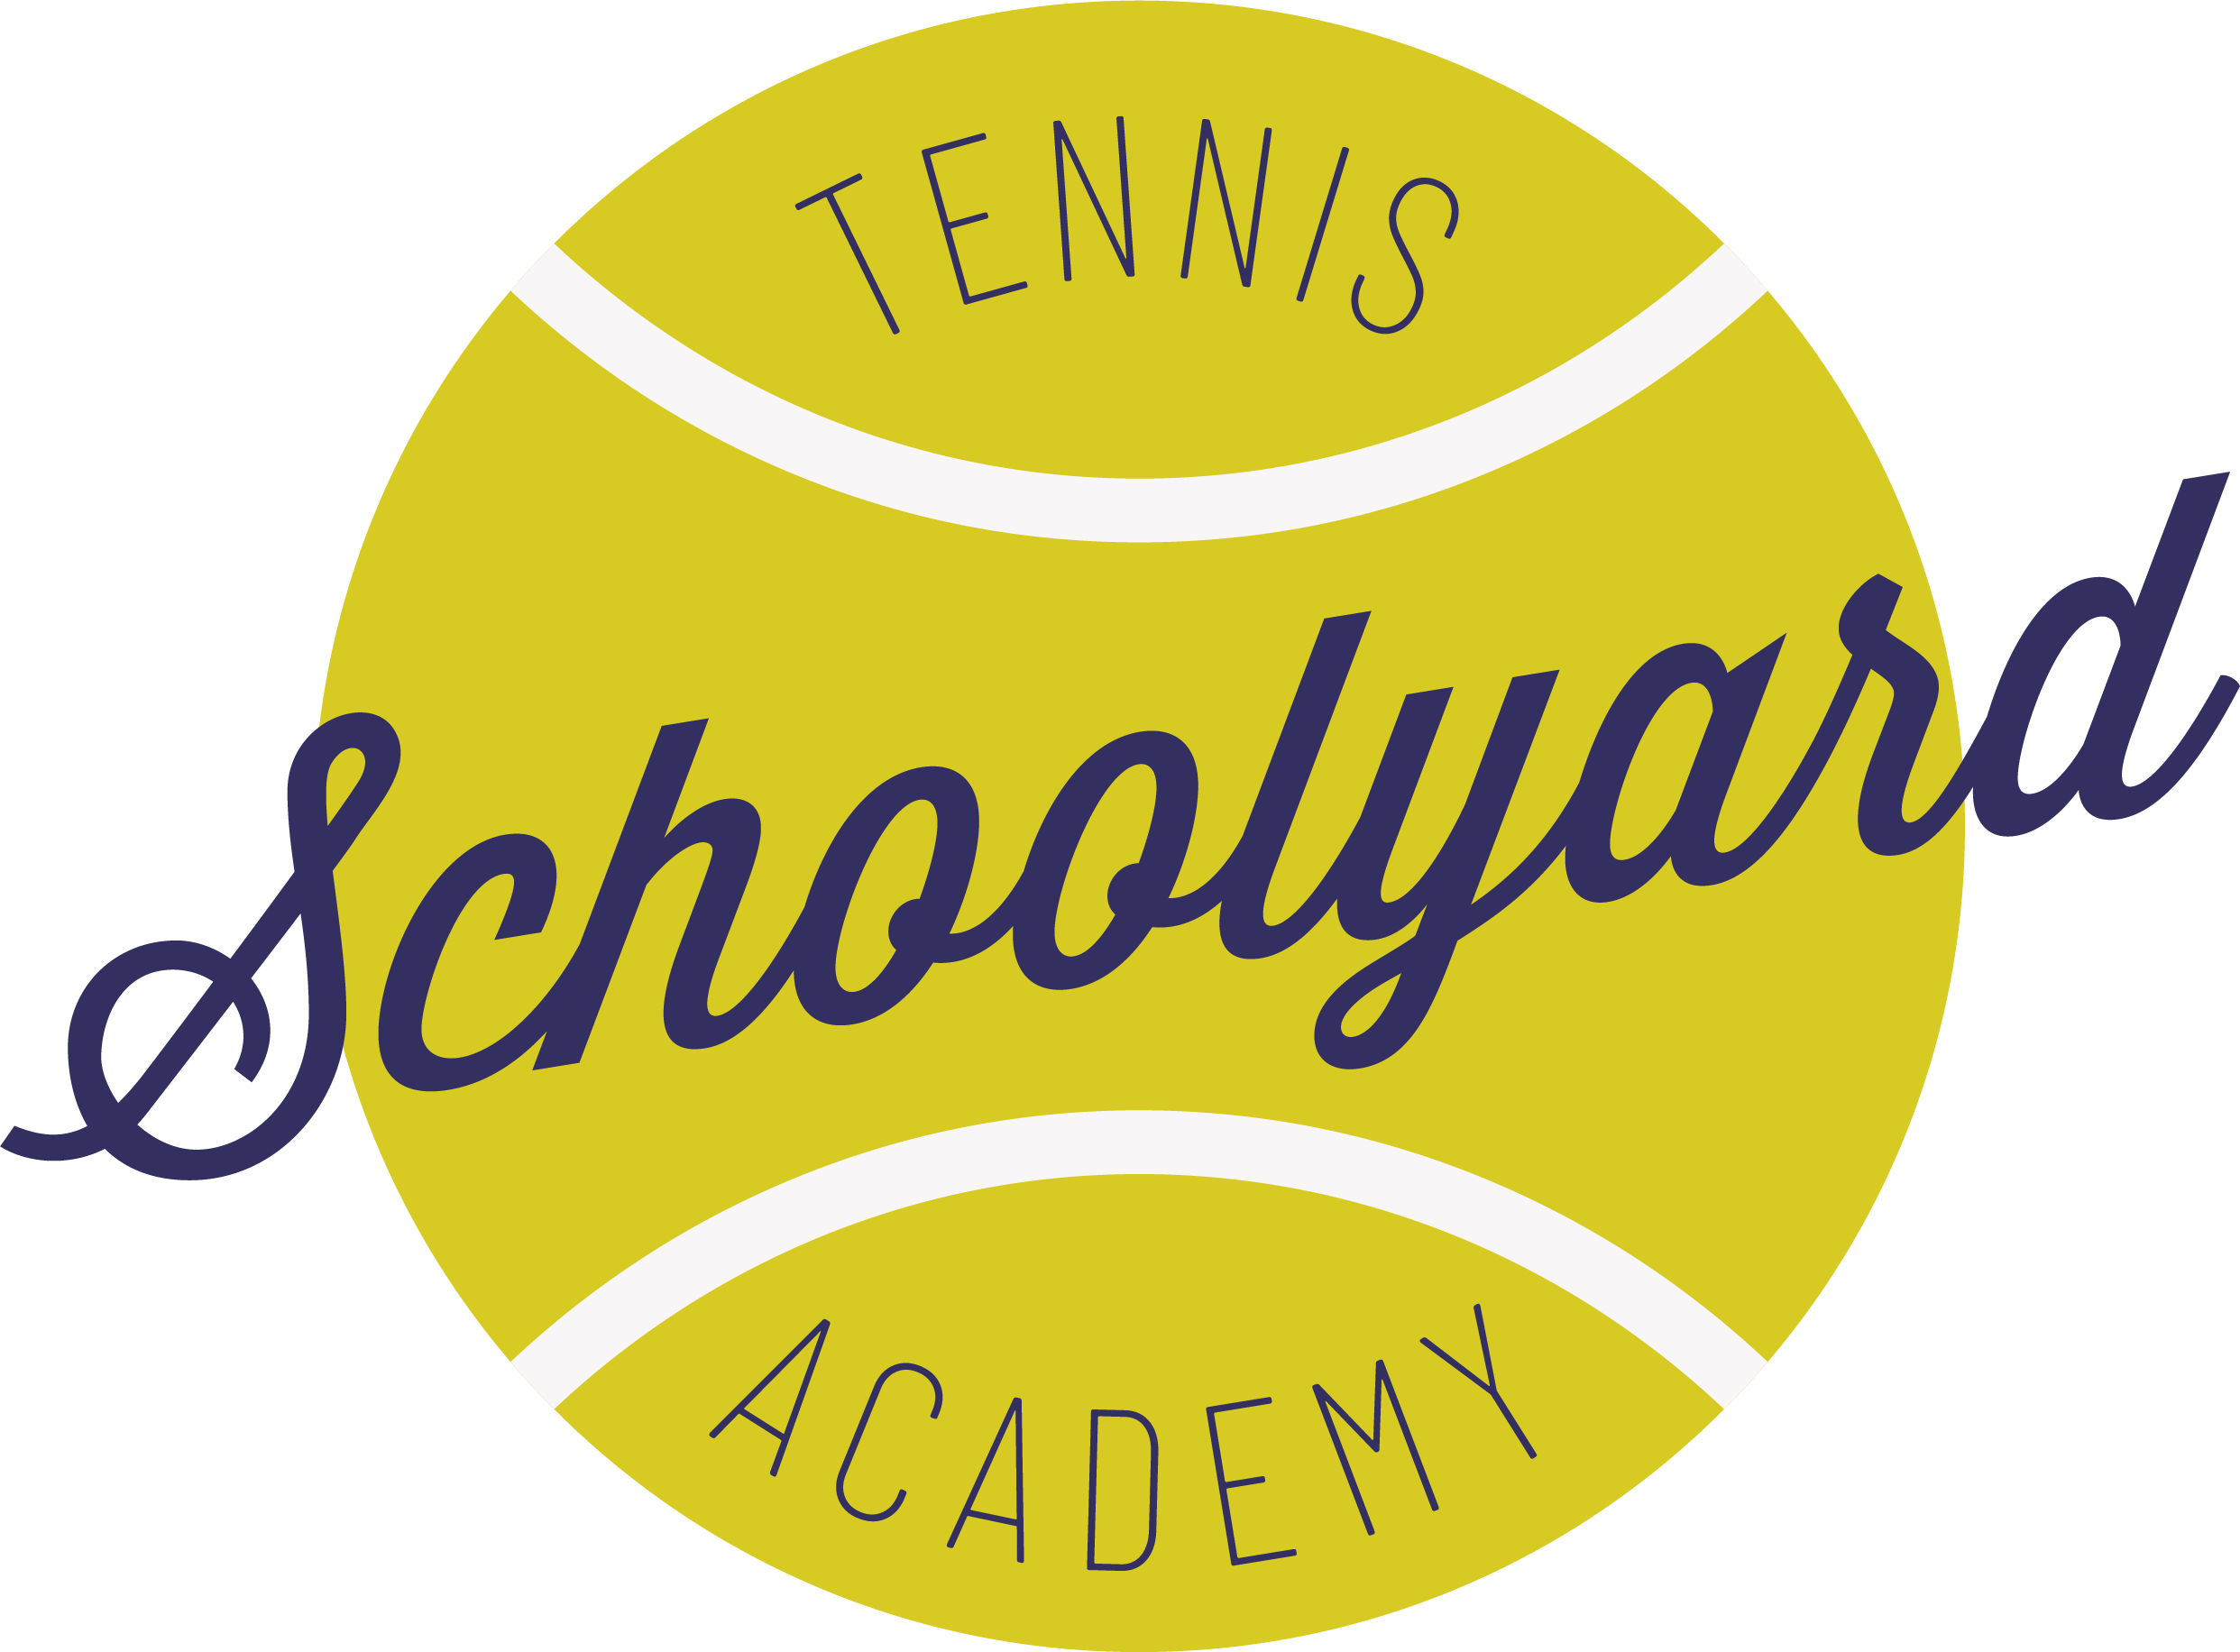 Schoolyard Tennis Academy